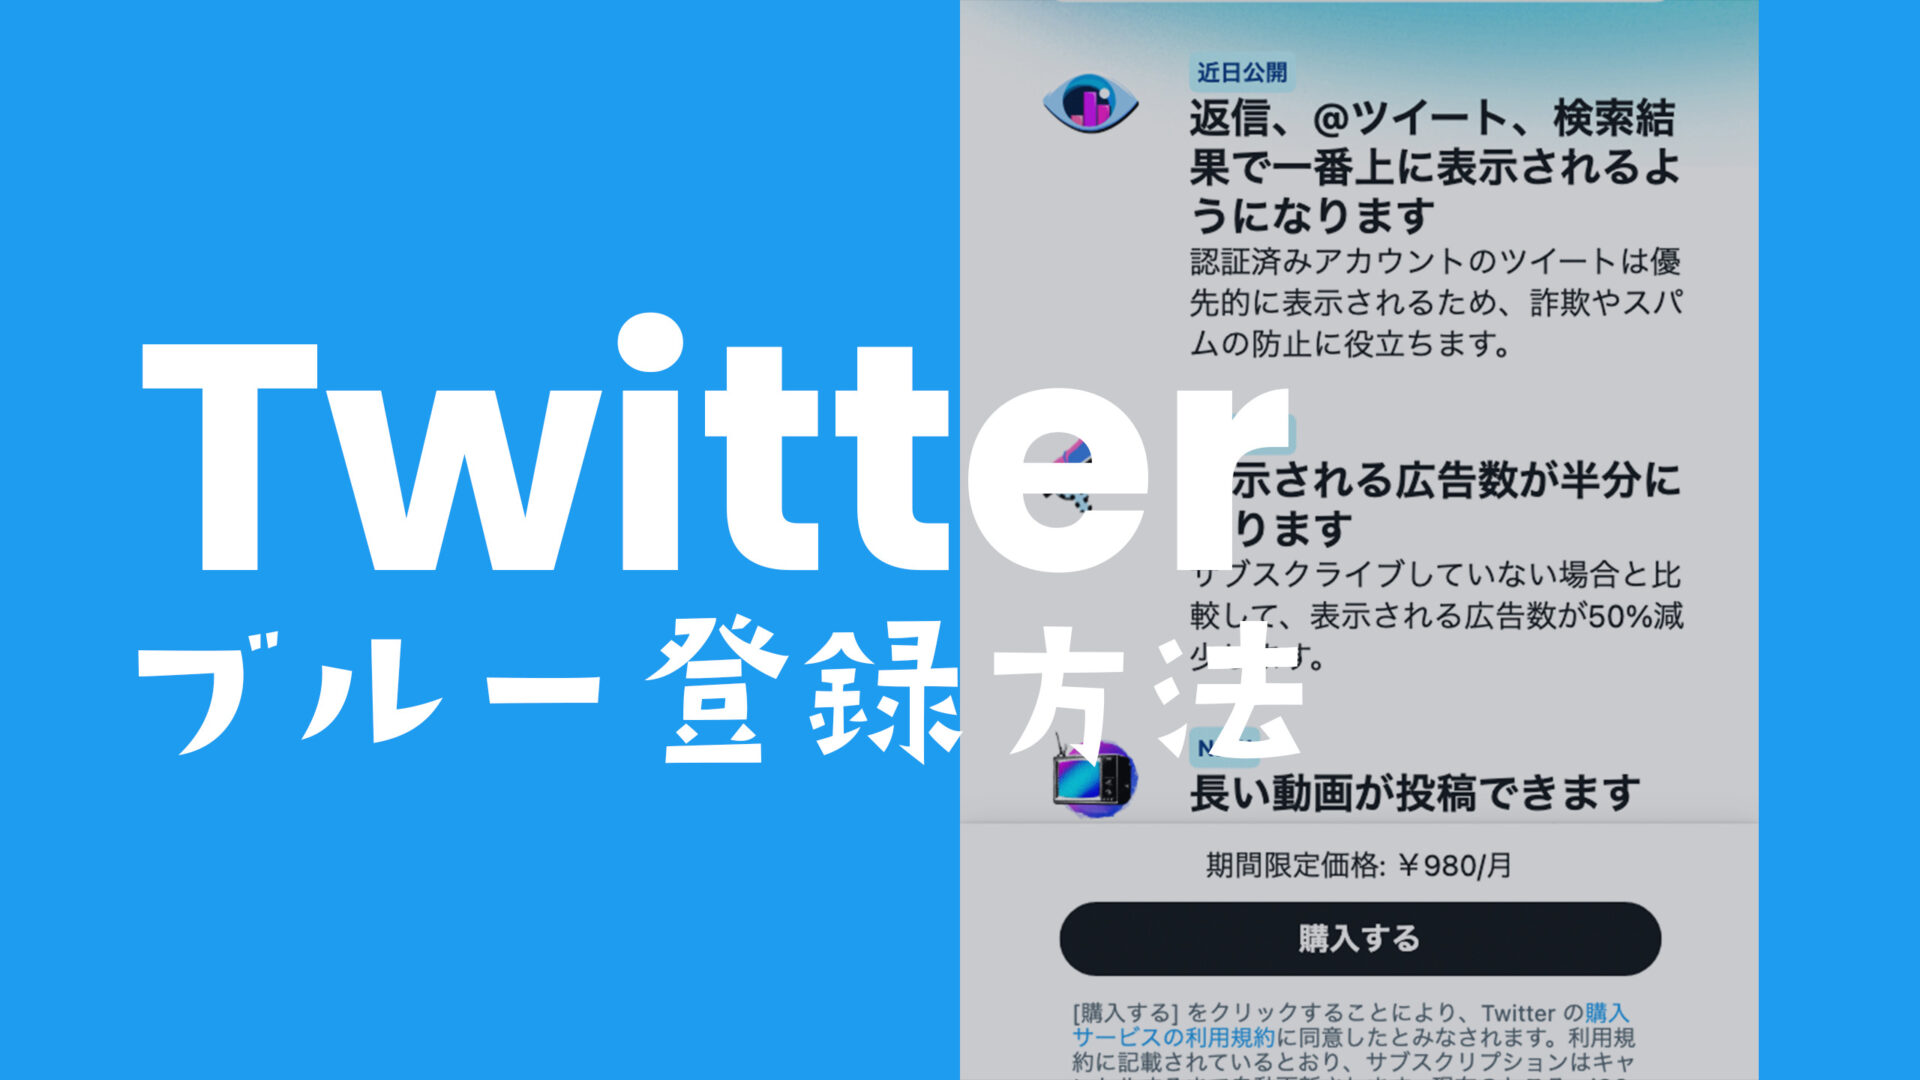 Twitter Blue(ツイッターブルー)の登録方法や日本でのやり方は？審査はある？のサムネイル画像